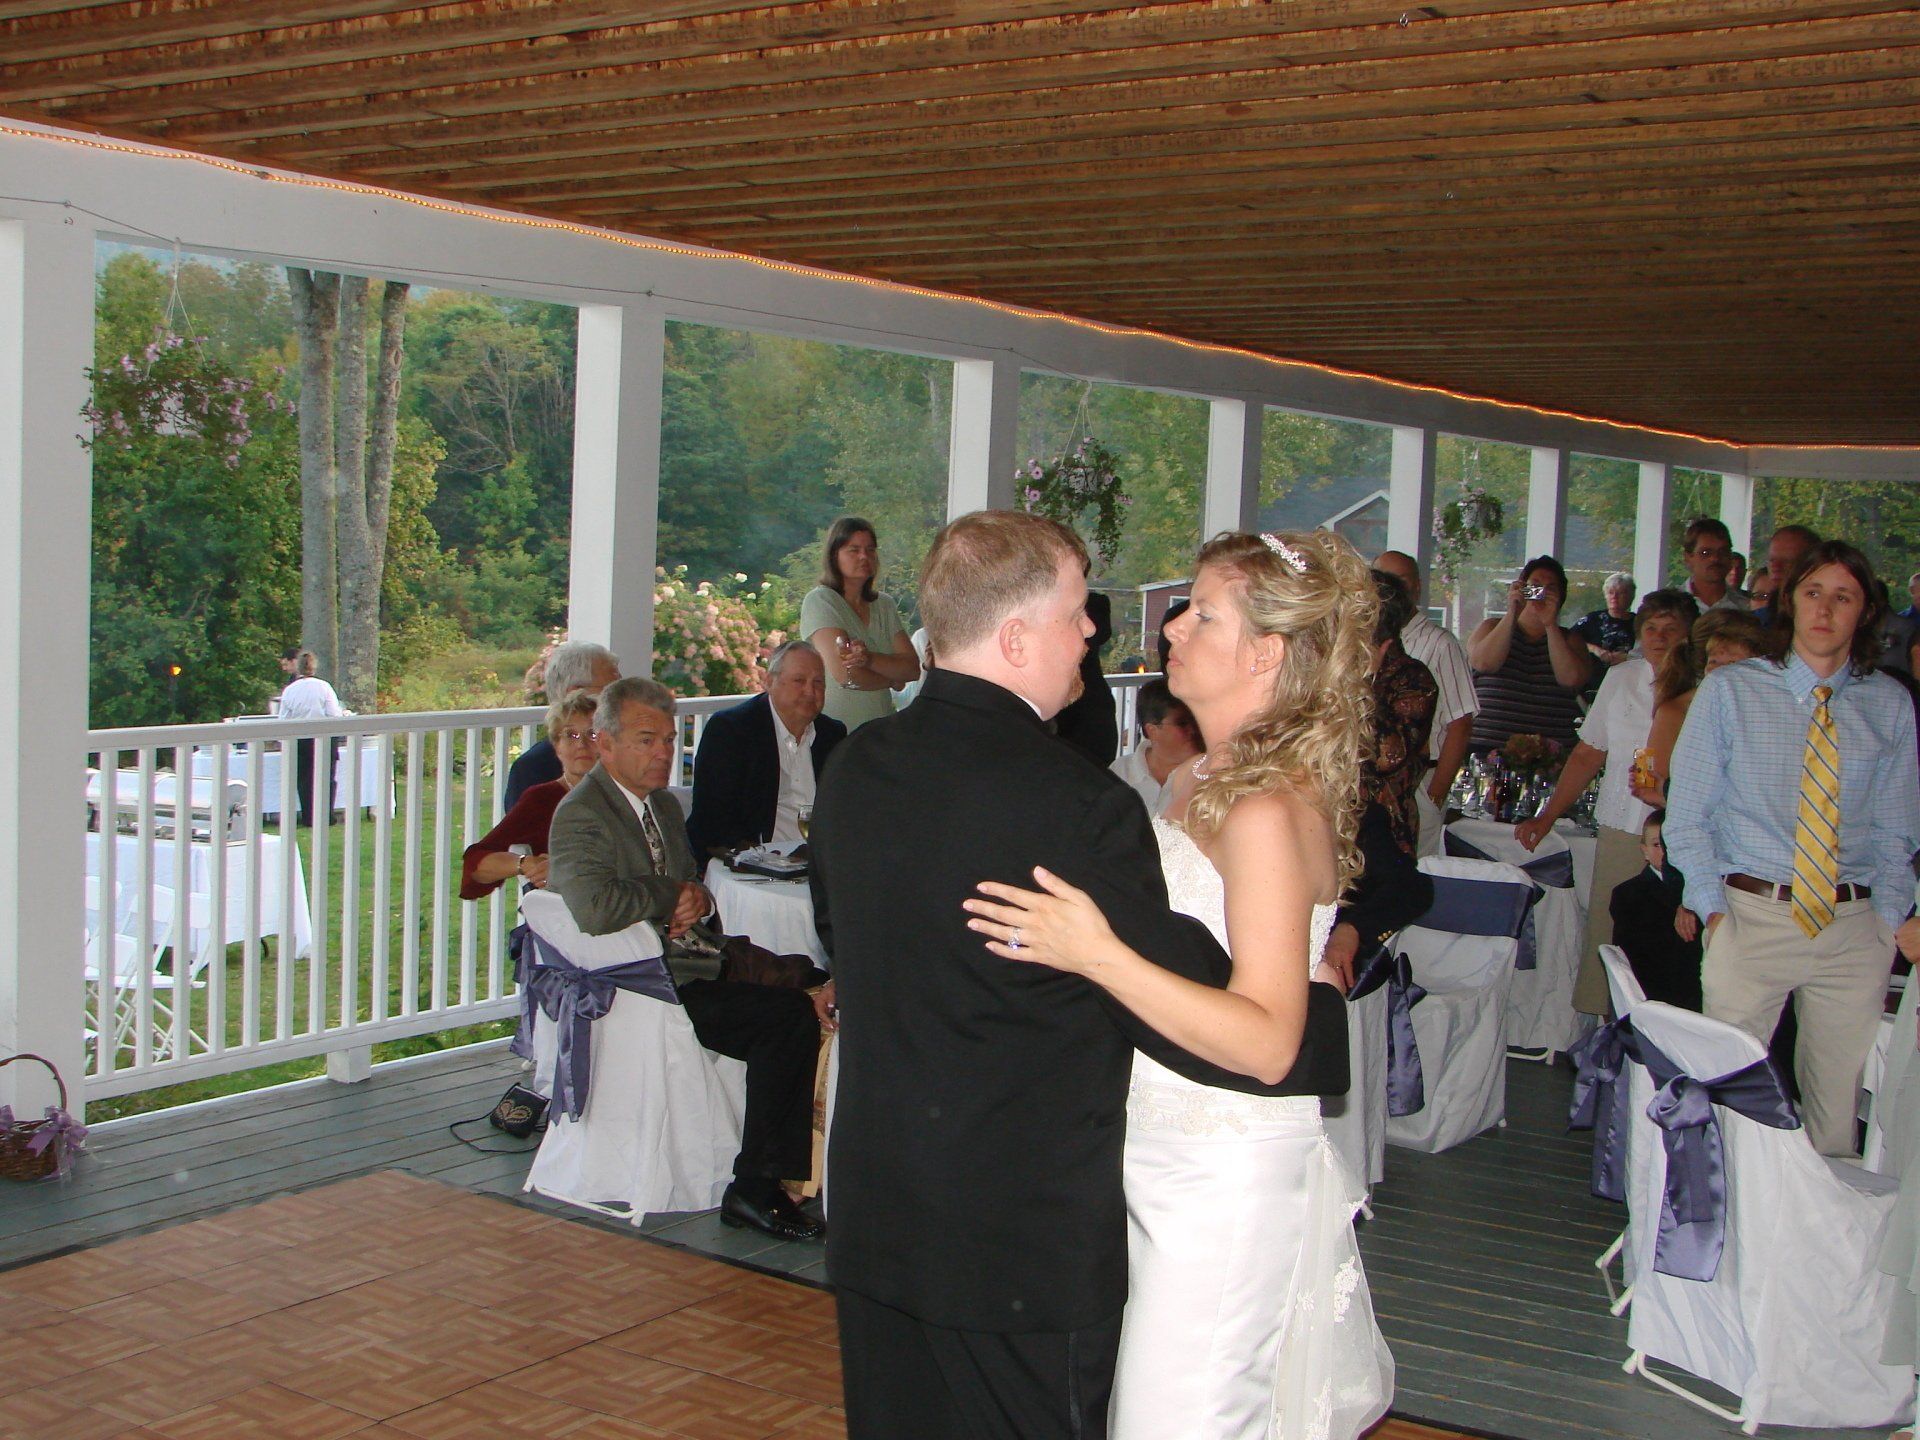 New Hampshire wedding dj dancing The Sunset Hill House, Sugar Hill, NH